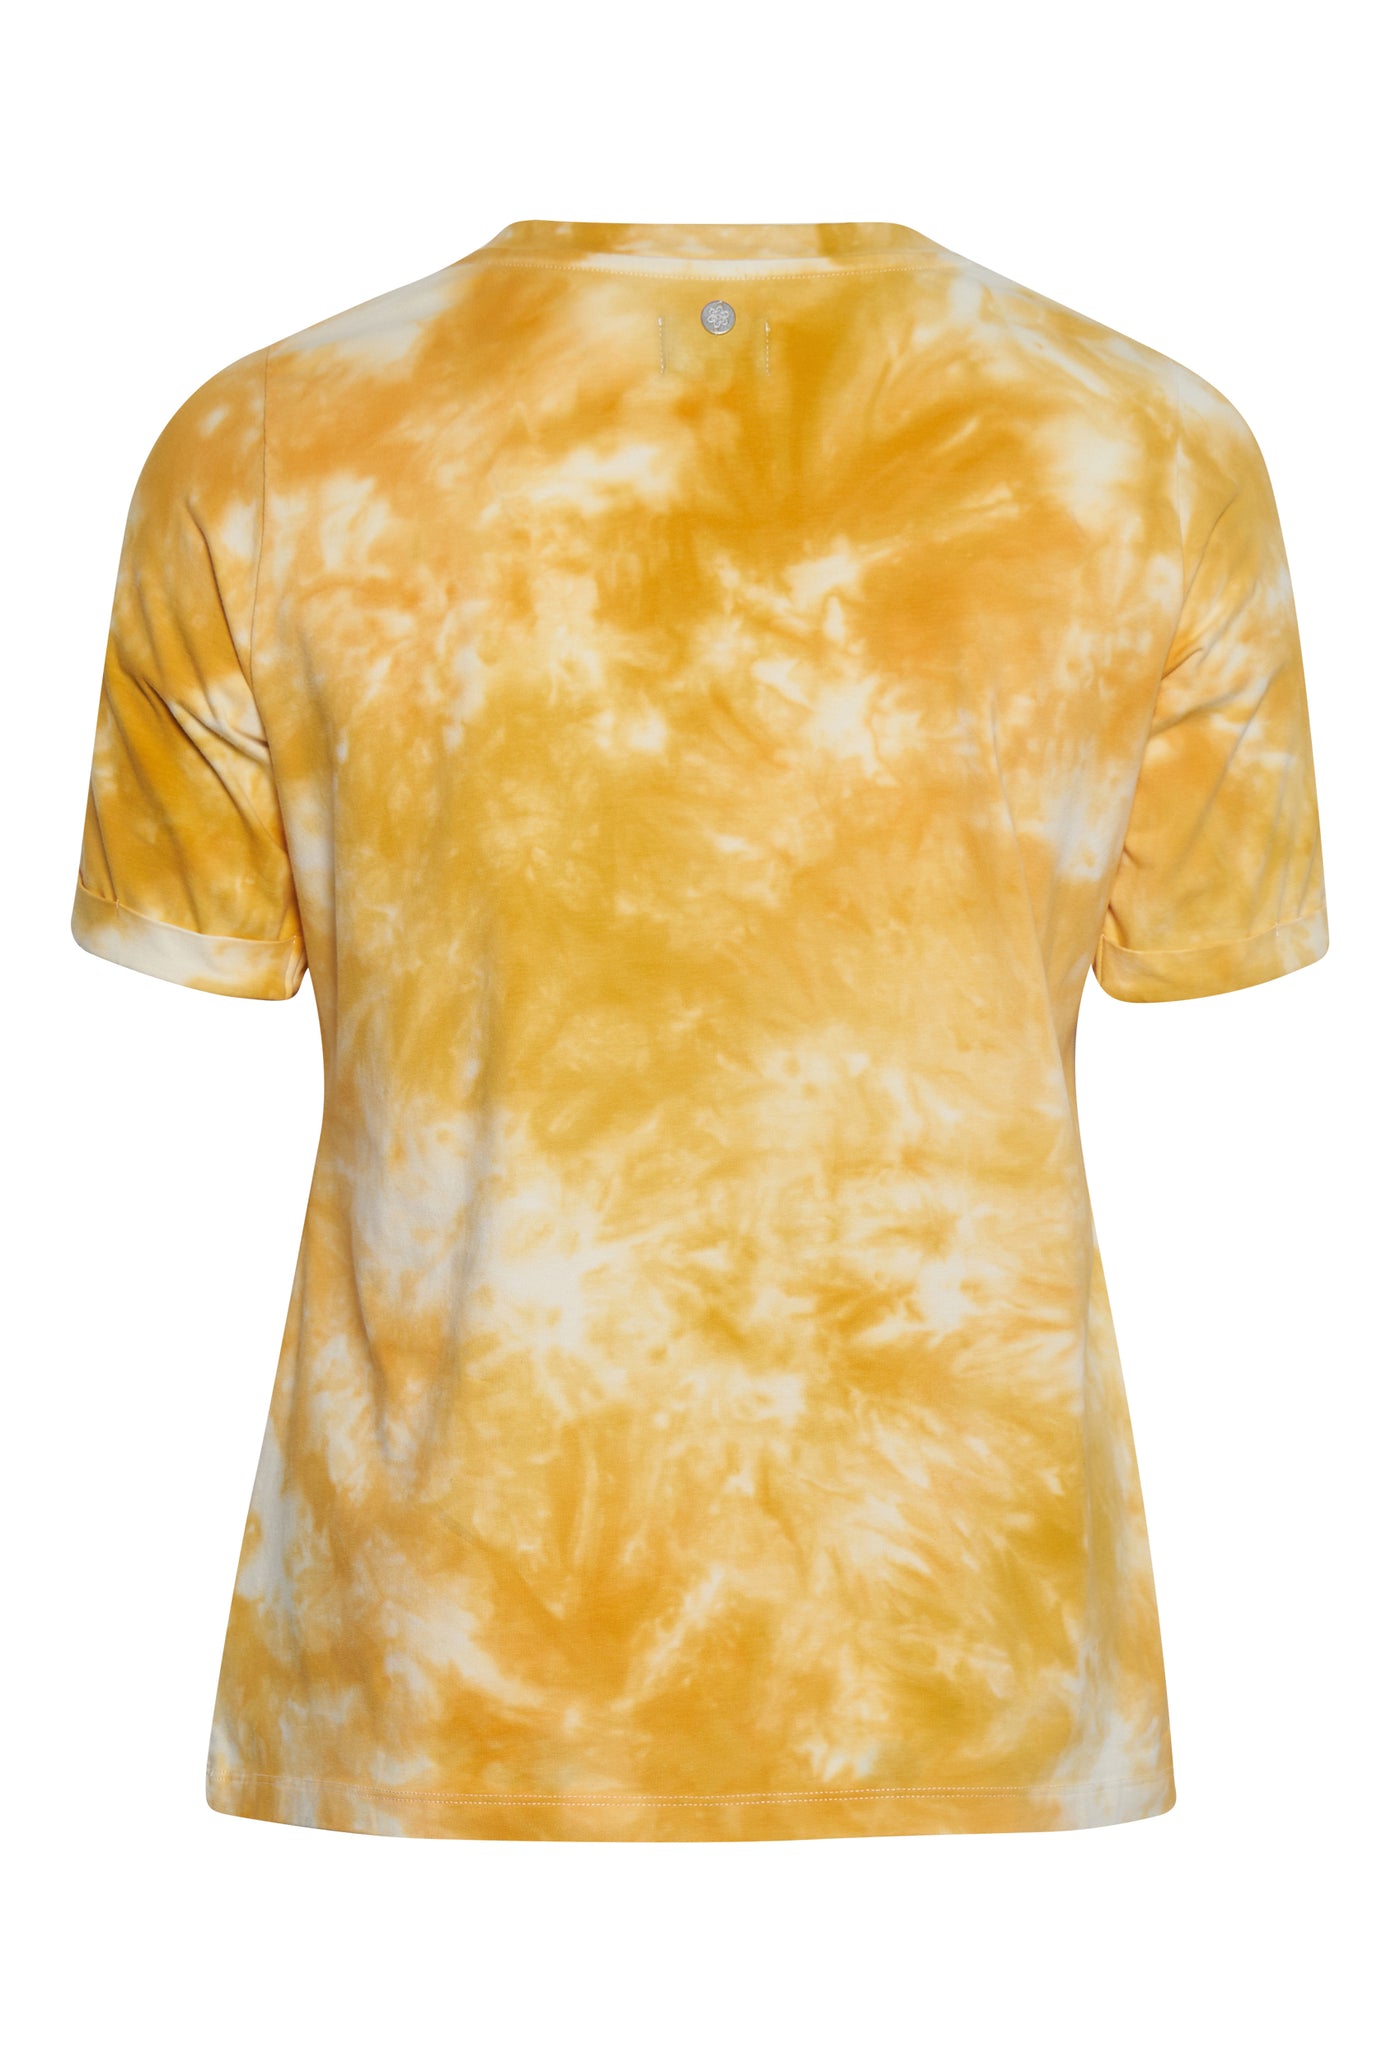 Aprico APBillings T-Shirt 779 Mango